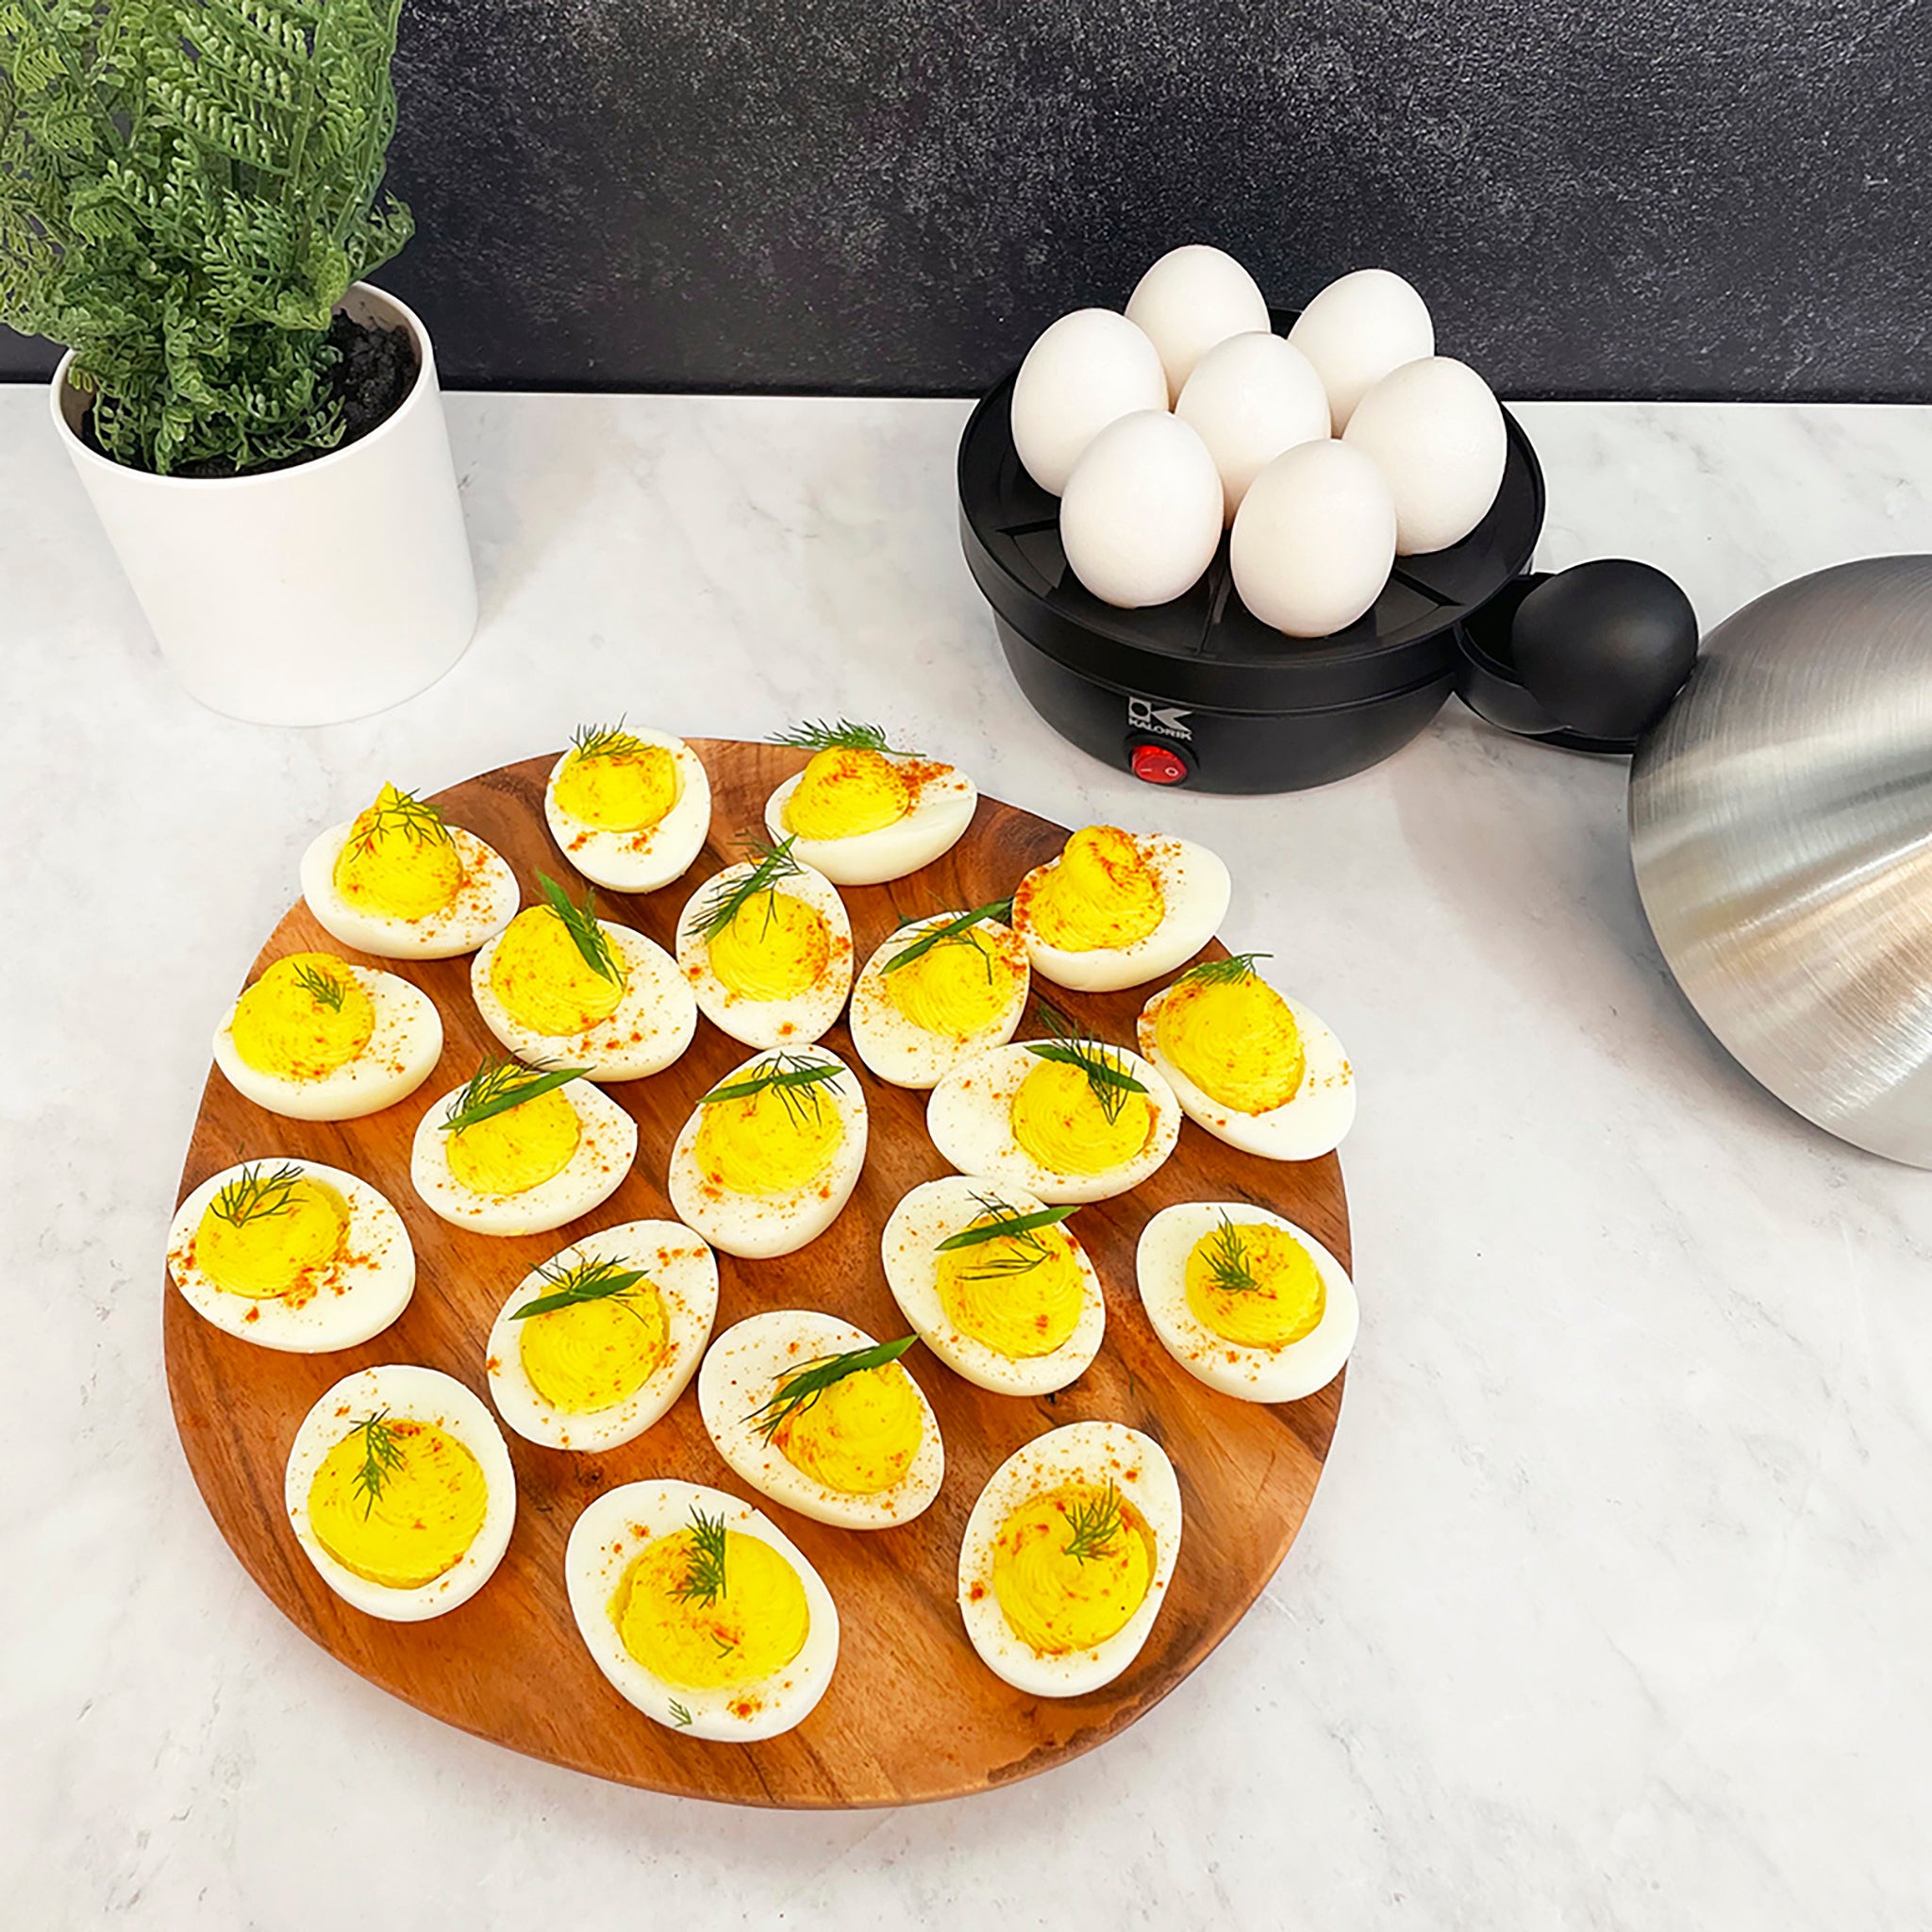 Deviled Eggs with the Kalorik Egg Cooker